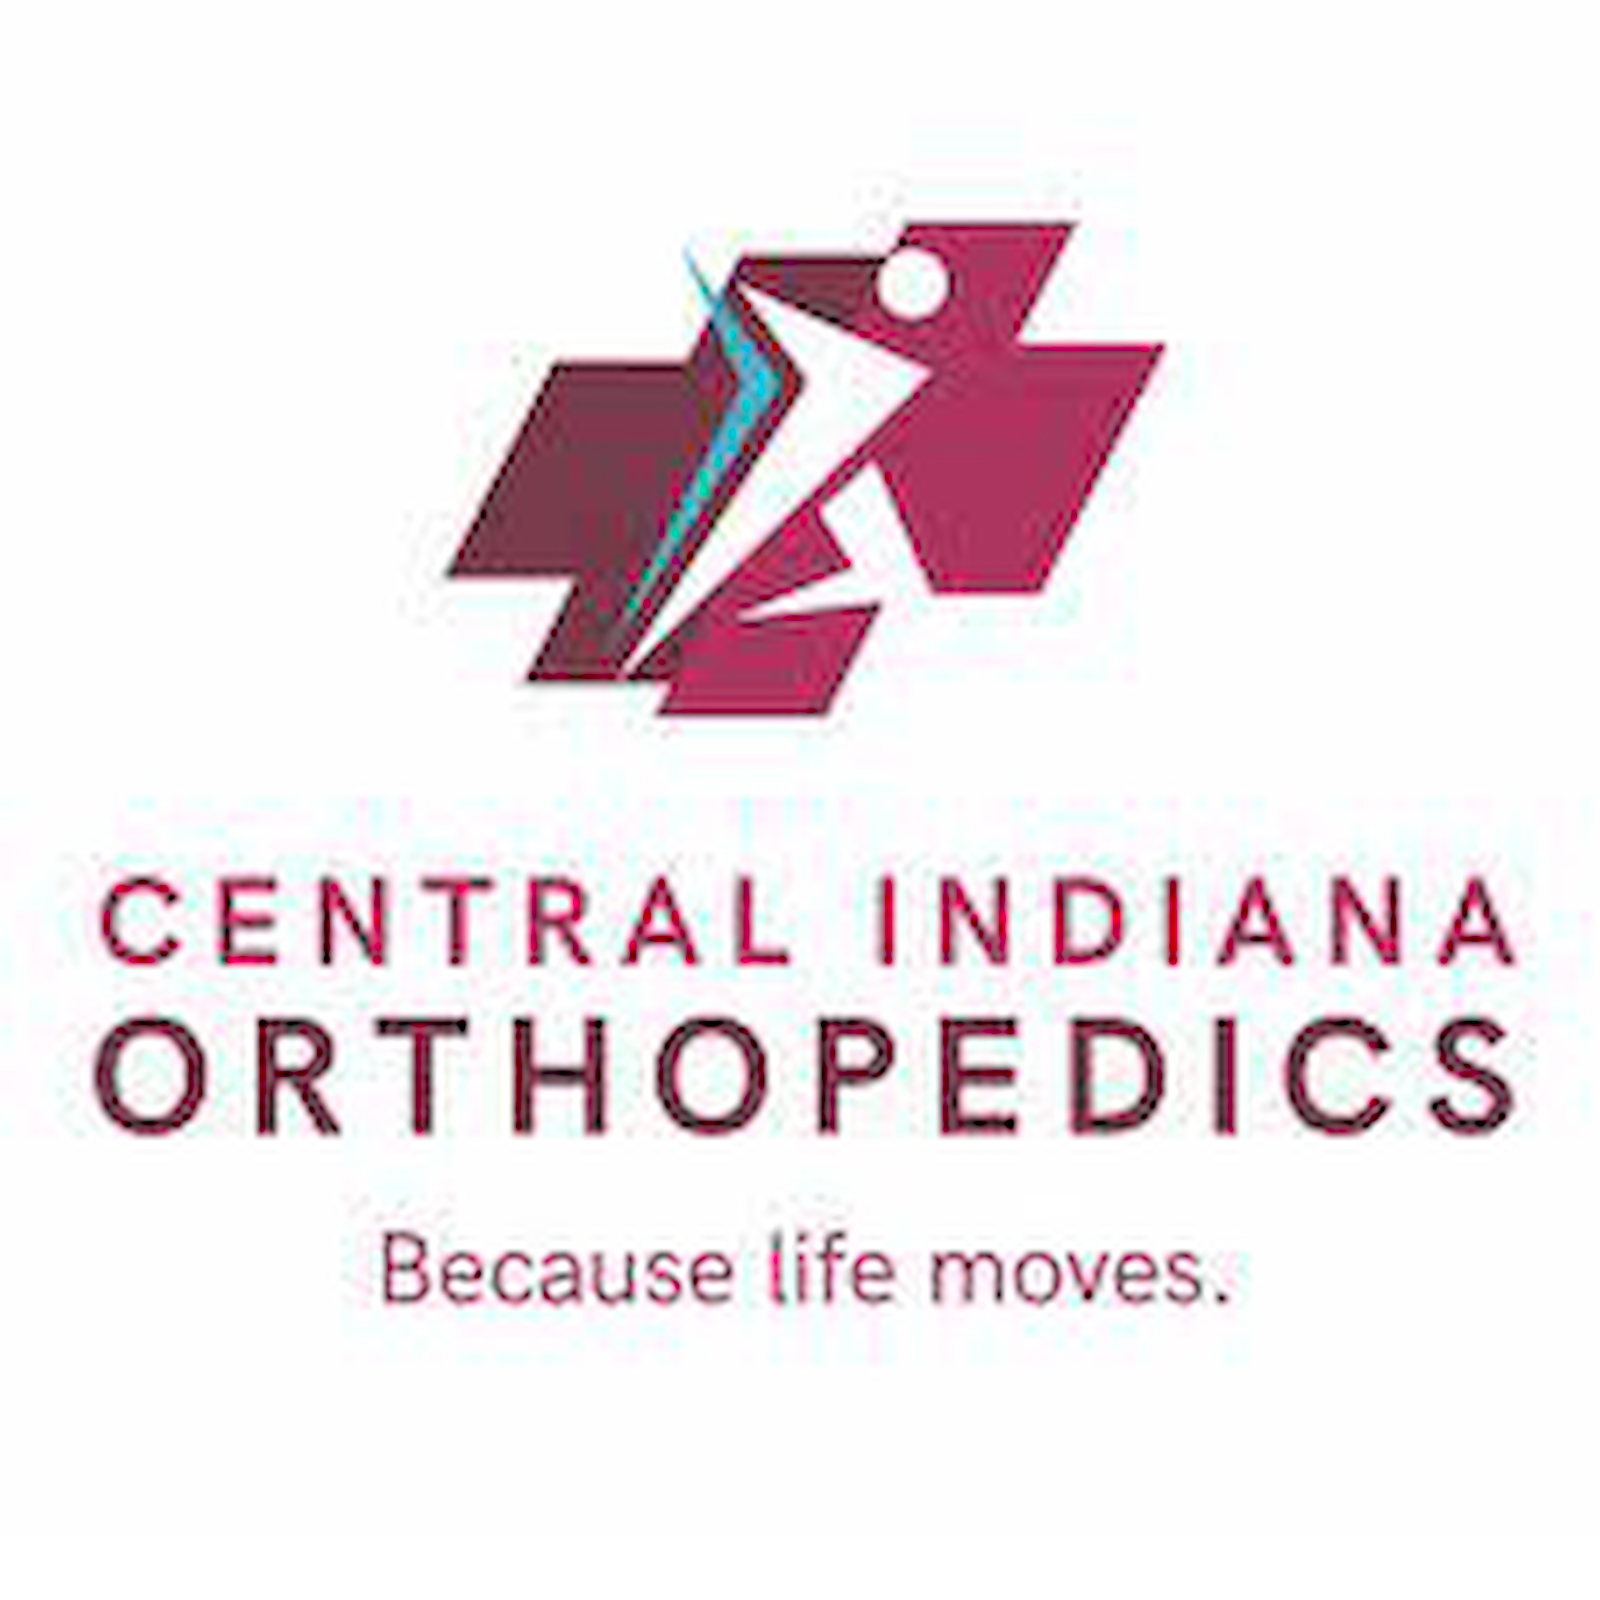 Central Indiana Orthopedics